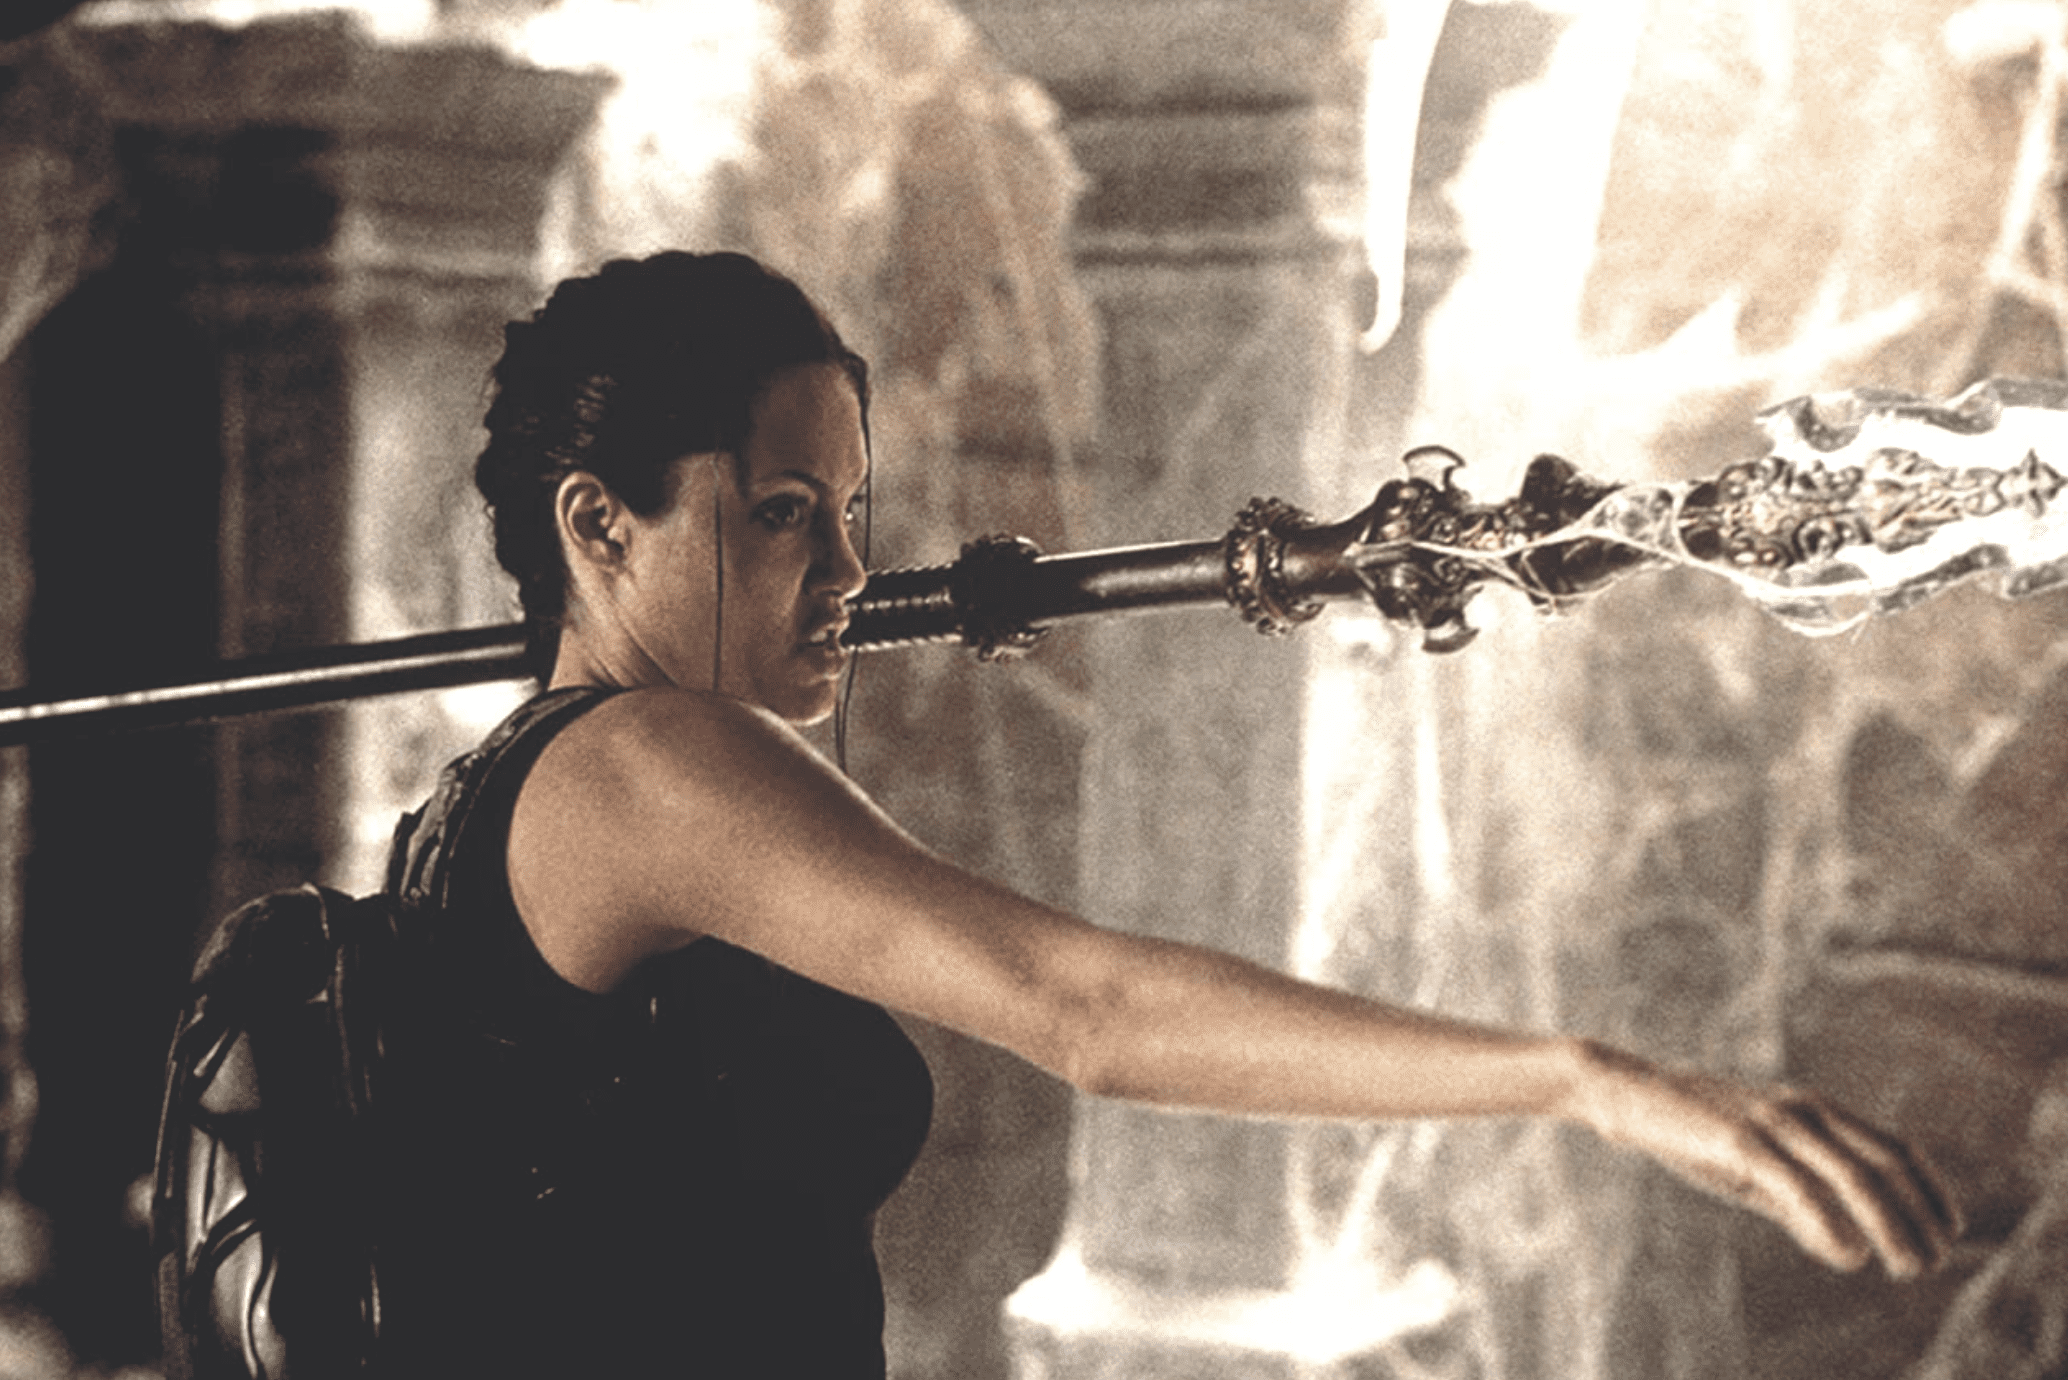 Lara prepares to throw a spear